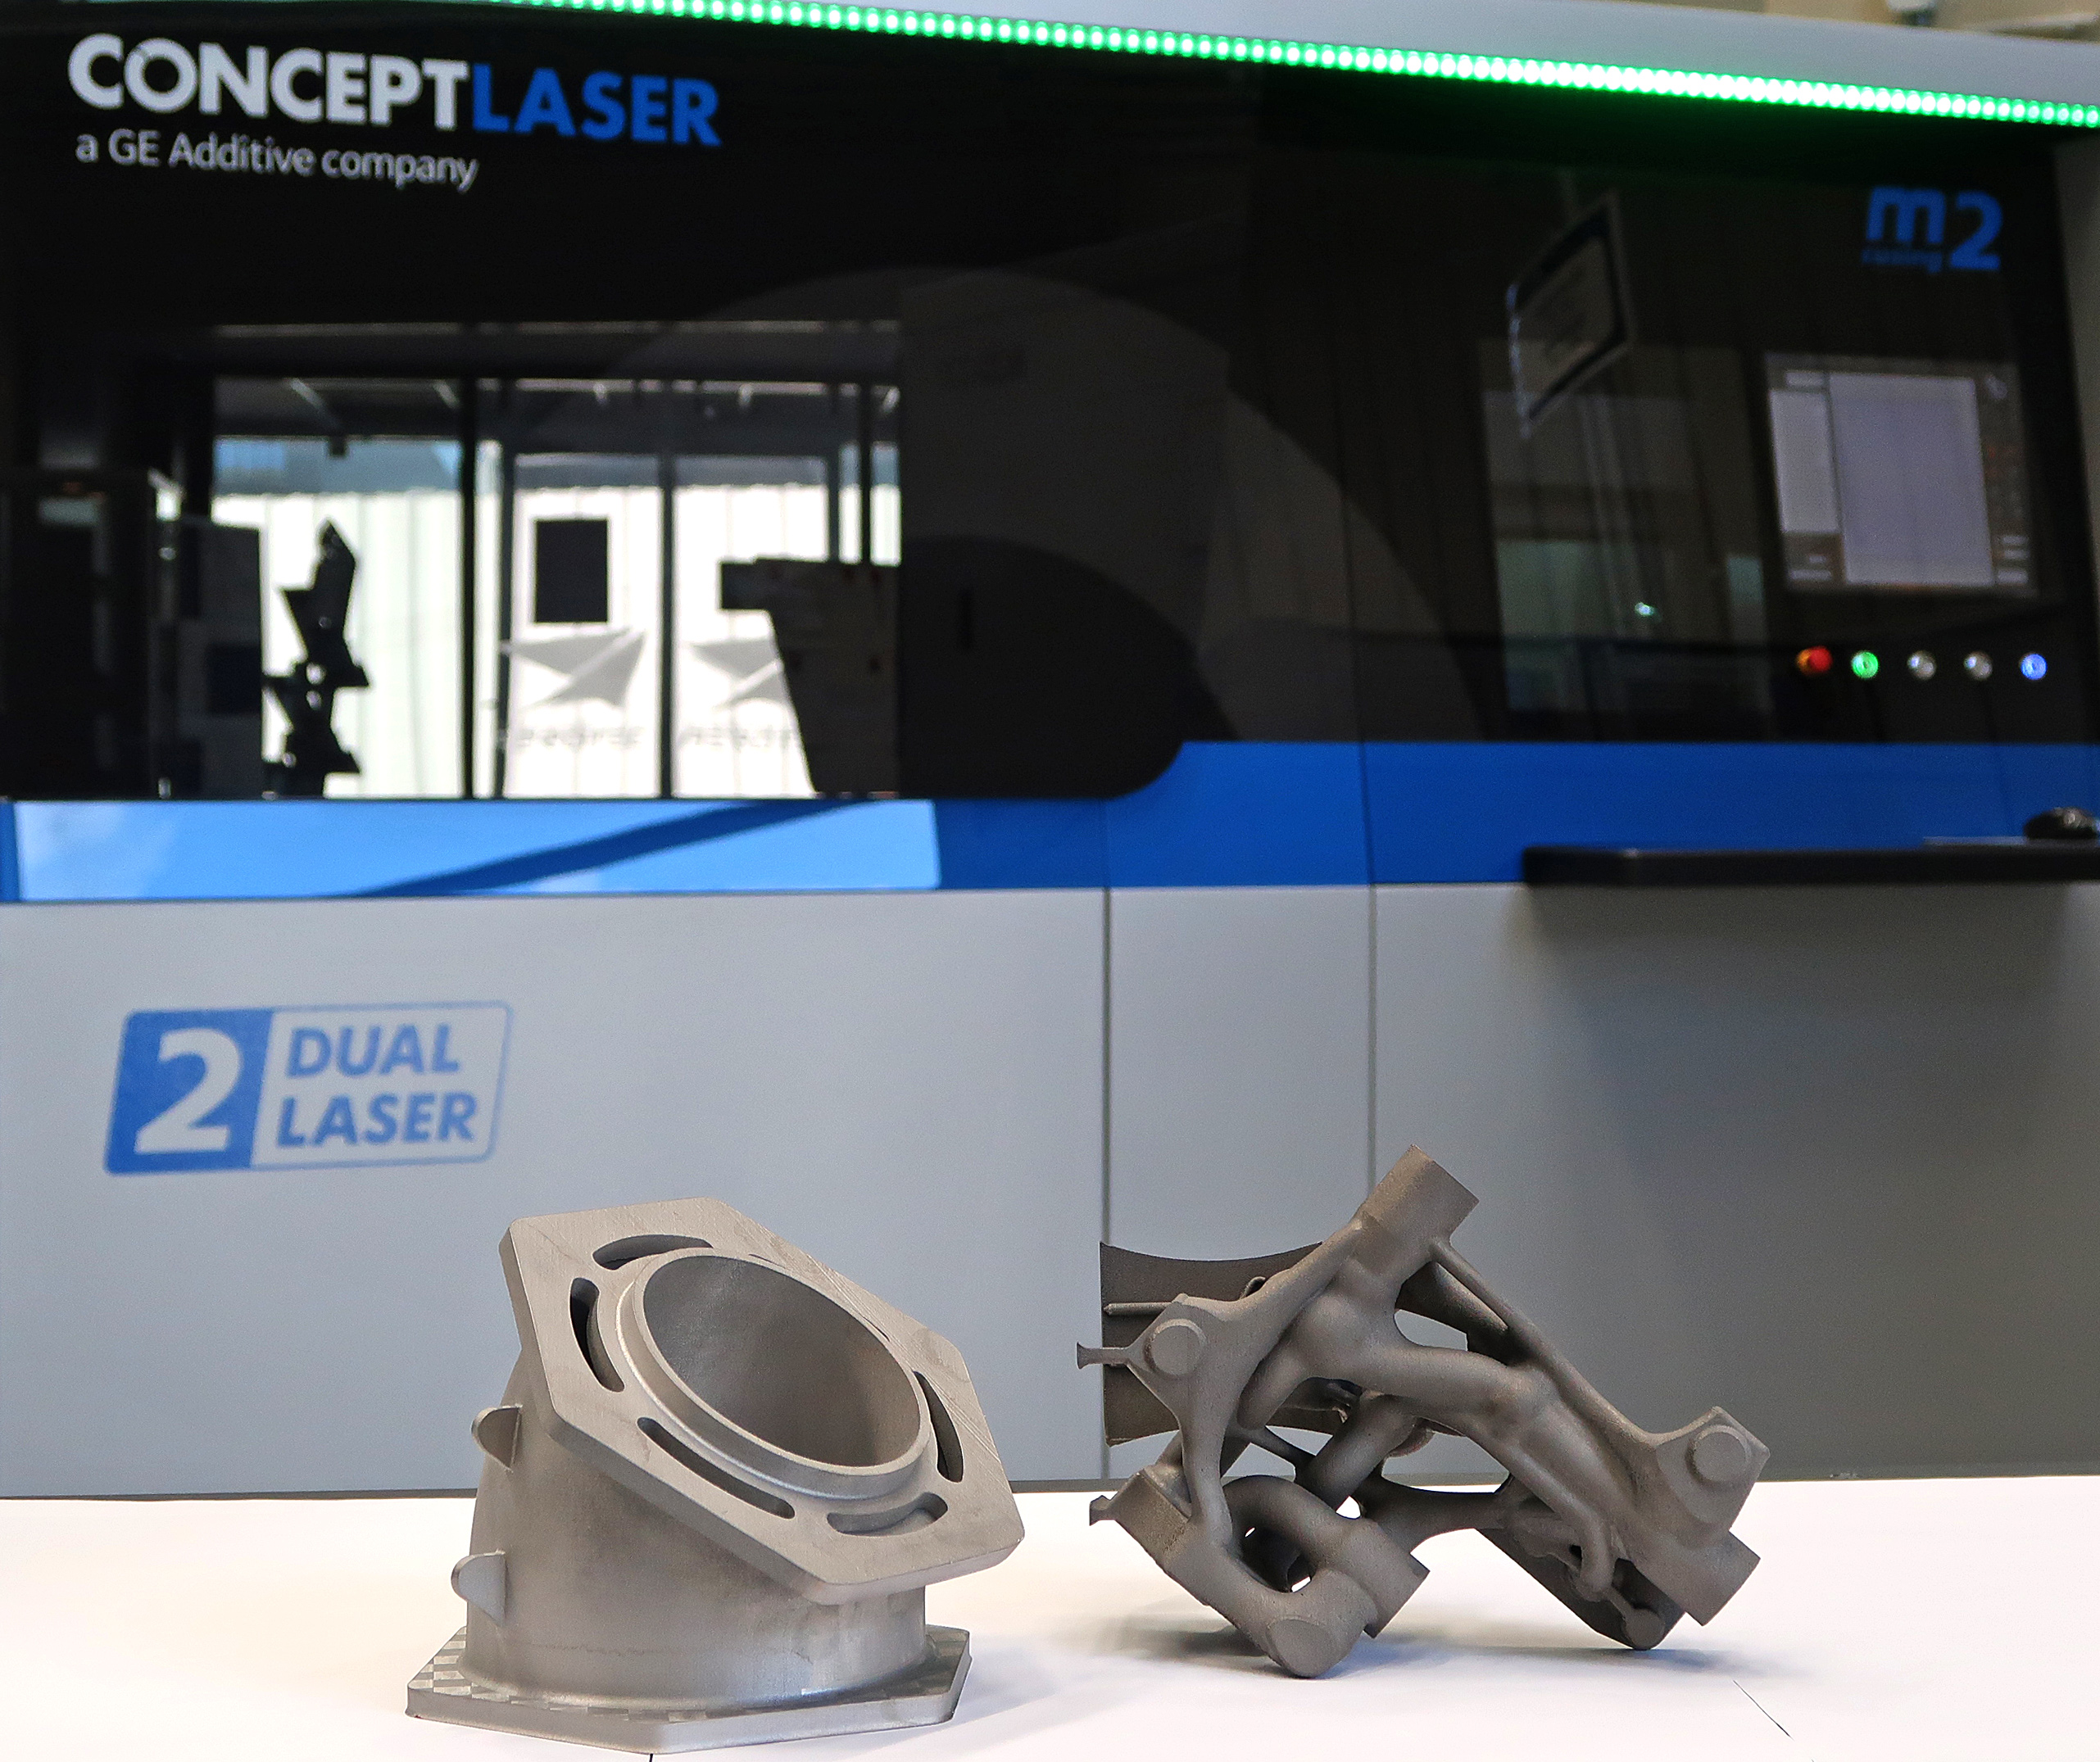 Titanium parts 3D printed on the Concept Laser M2. Photo via GE Additive.